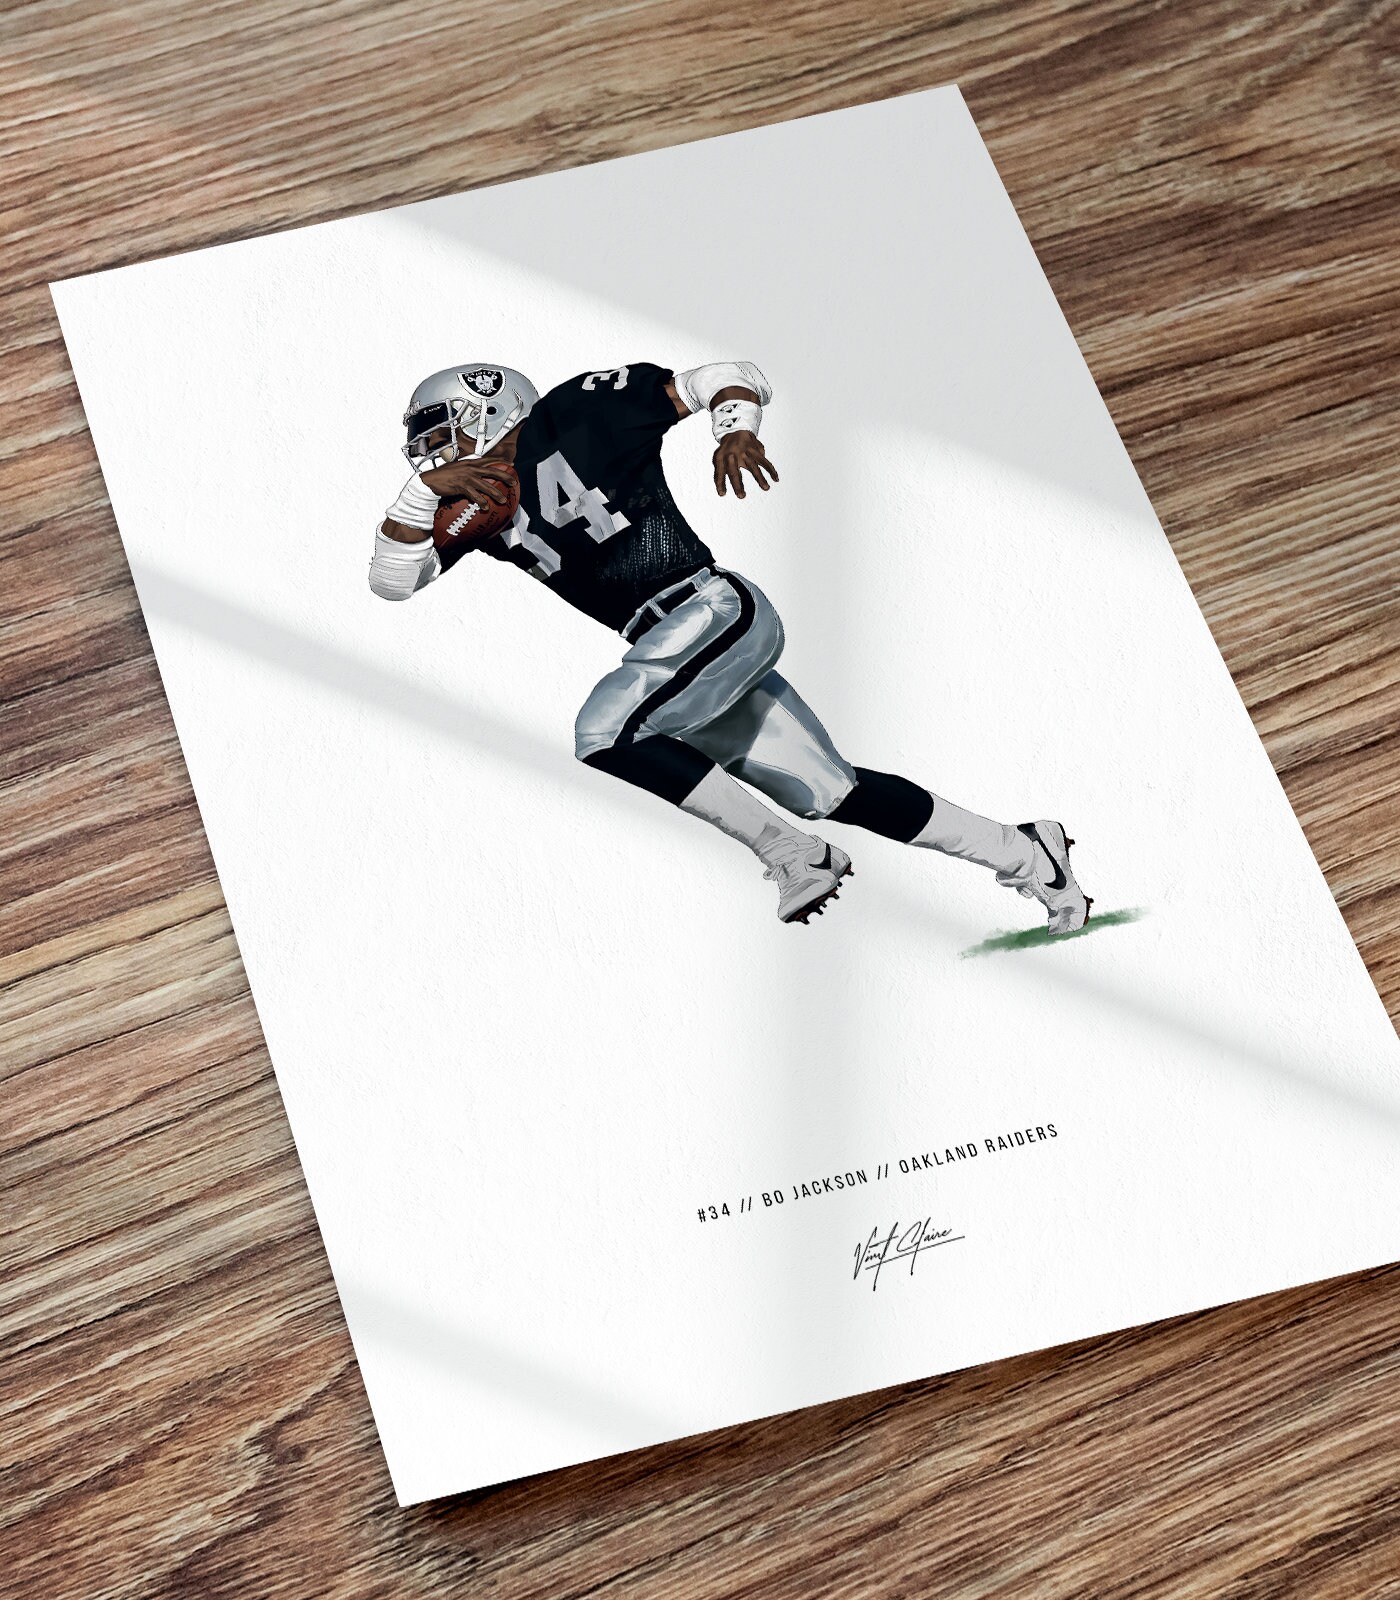 Bo Jackson Oakland Raiders Football Illustrated Art Poster Print, Bo Jackson Los Angeles Raiders Fans, Gift for Raiders Fans